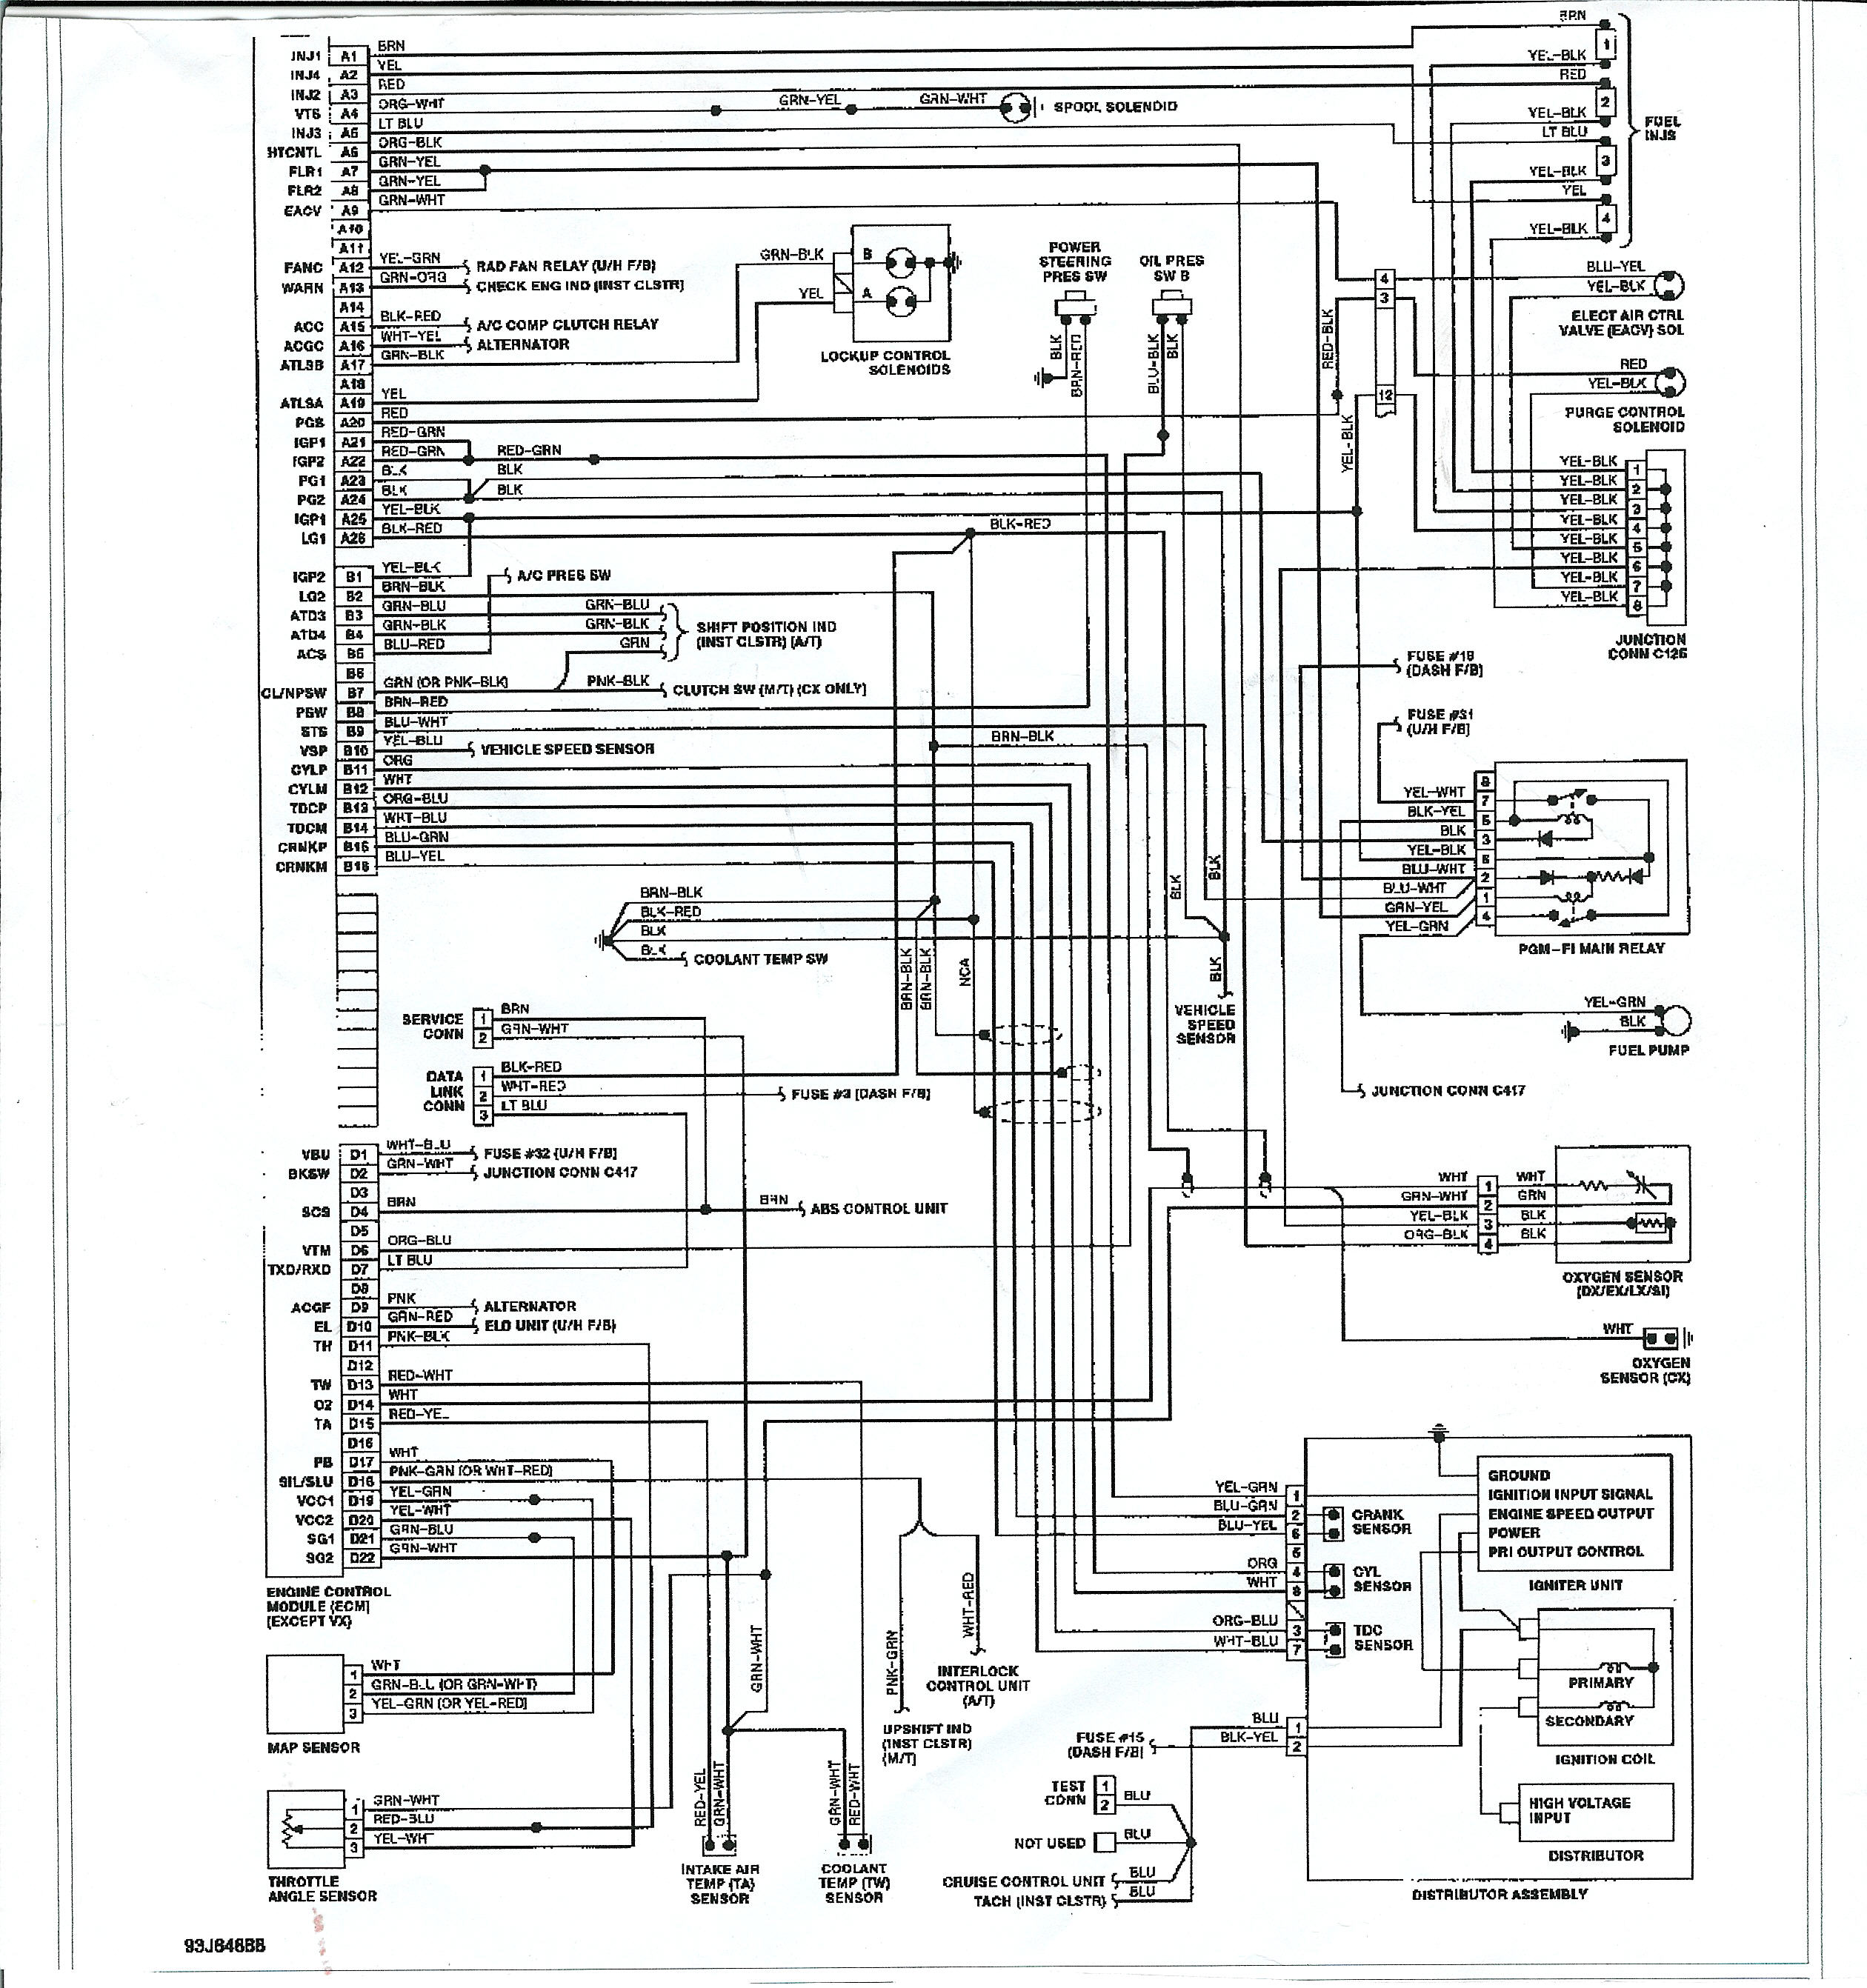 Acura Integra Wiring Diagram 2001 Hp Photosmart Printer